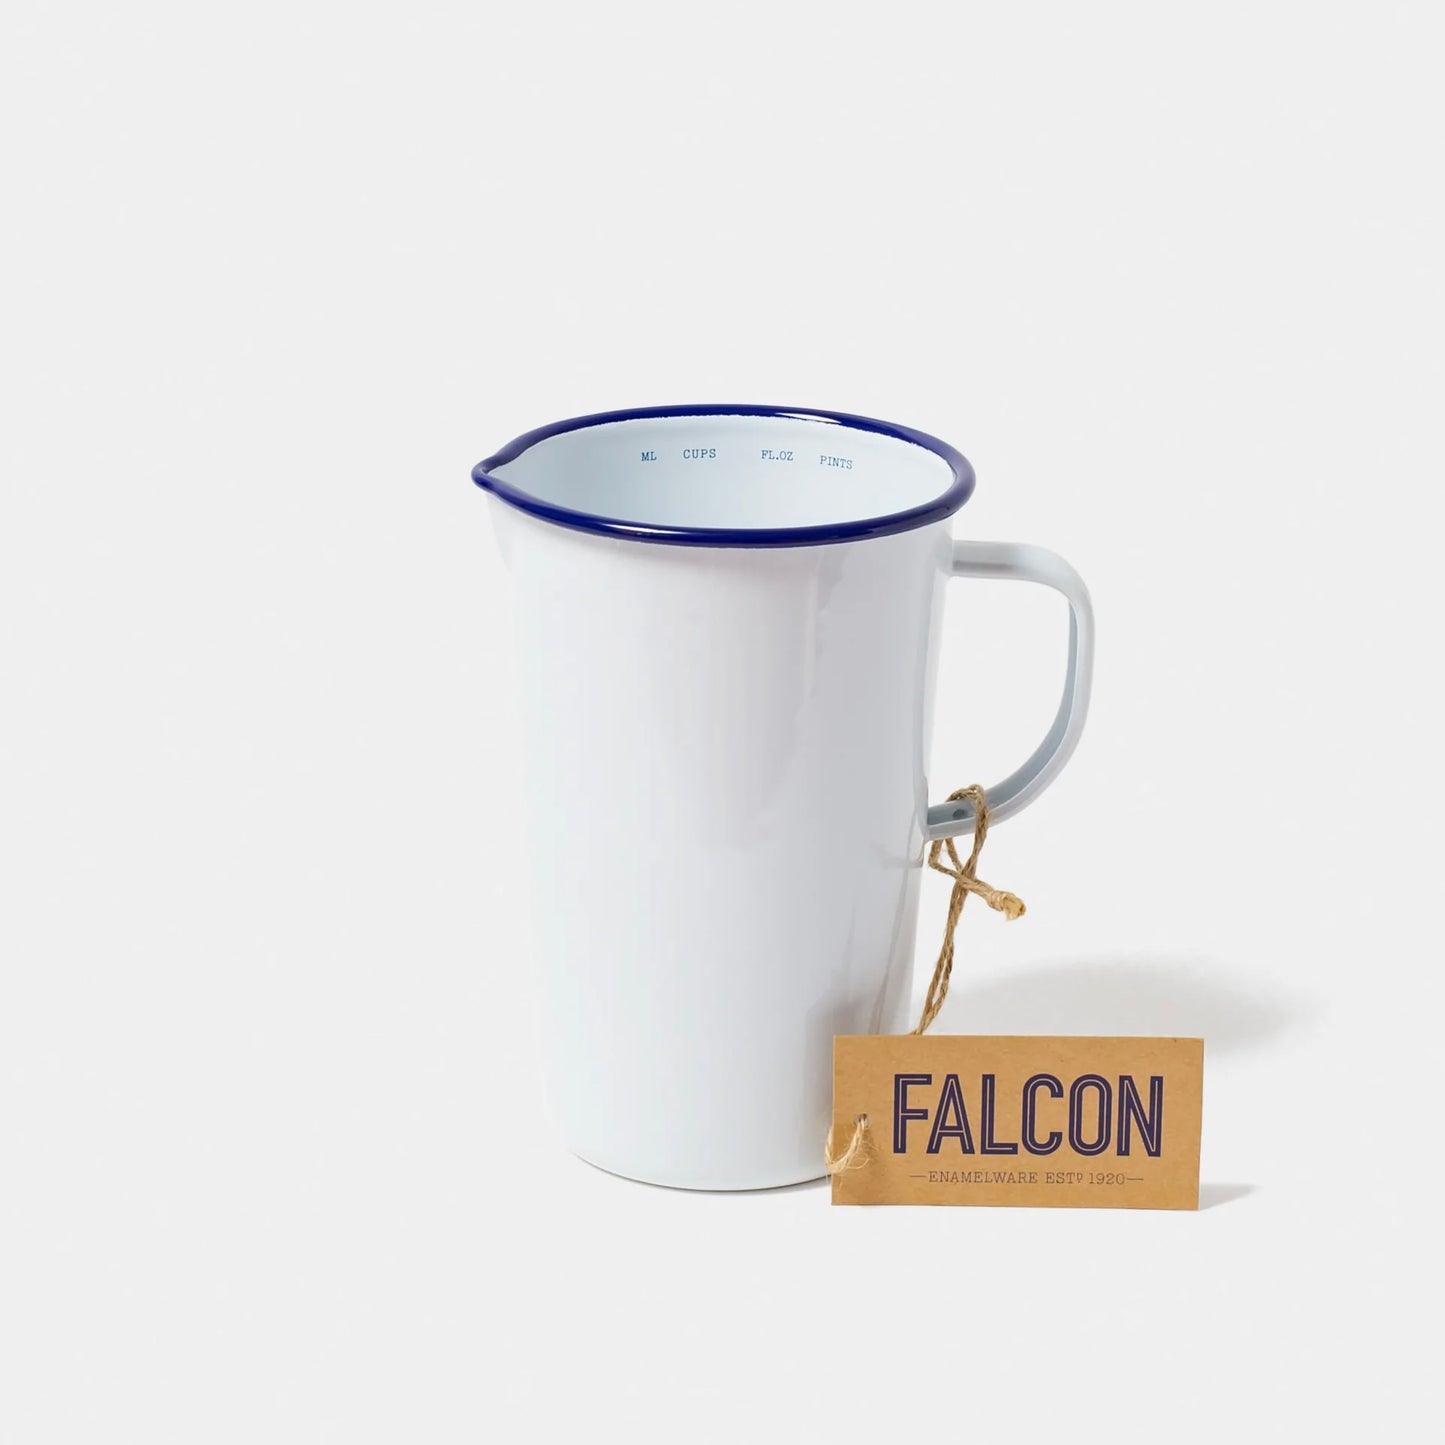 2 Pint Kande I Emalje, Hvid med blå kant - Falcon Enamelware